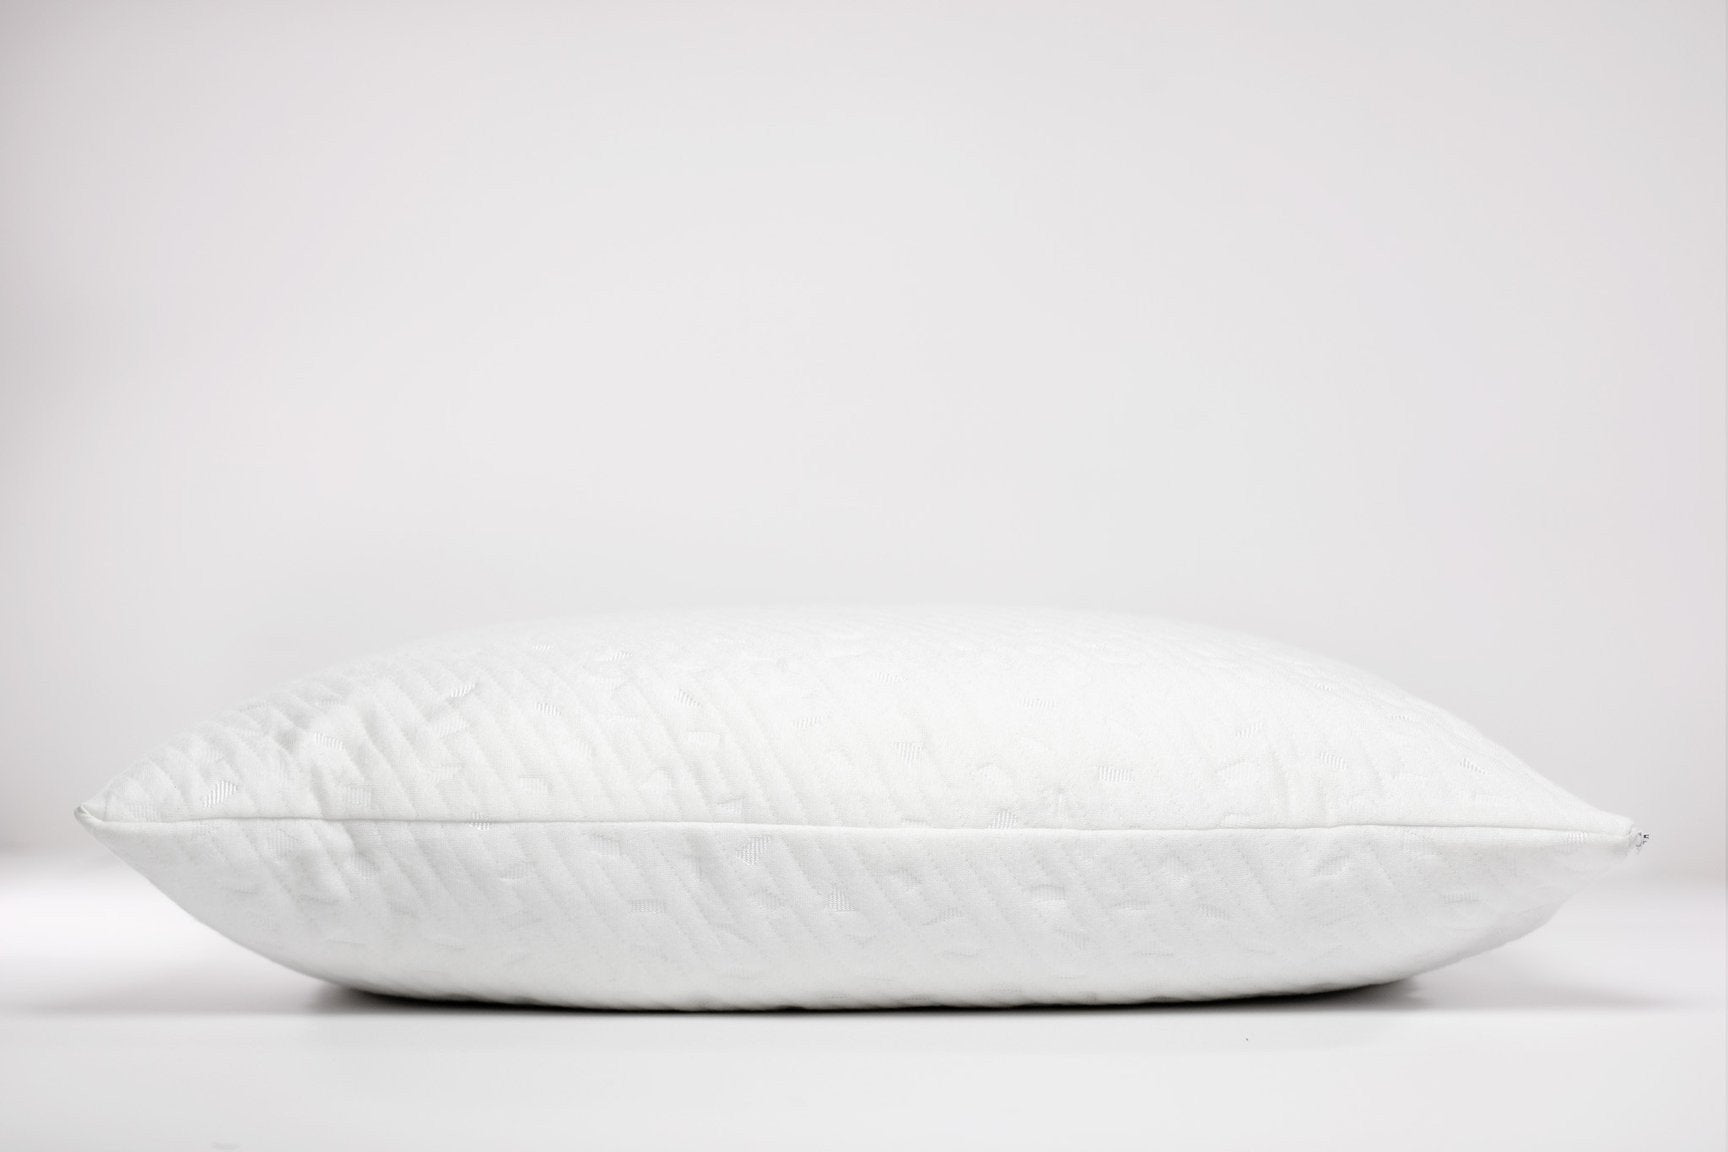 Organic Kamboo Pillow - King (Made in Canada) - Canadian Furniture